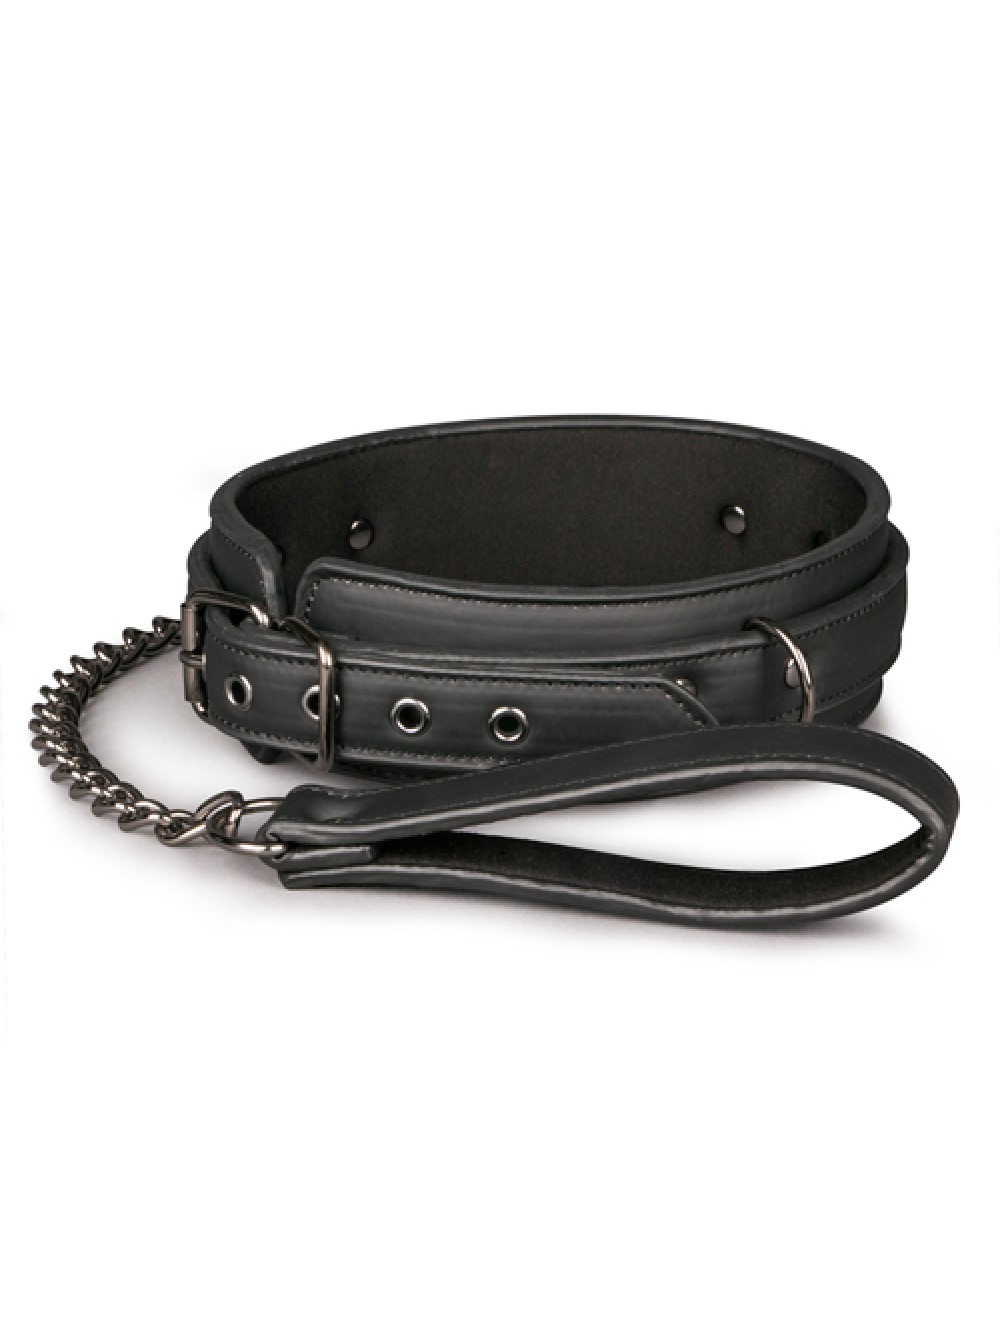 Fetish collar with leash 8718627529737